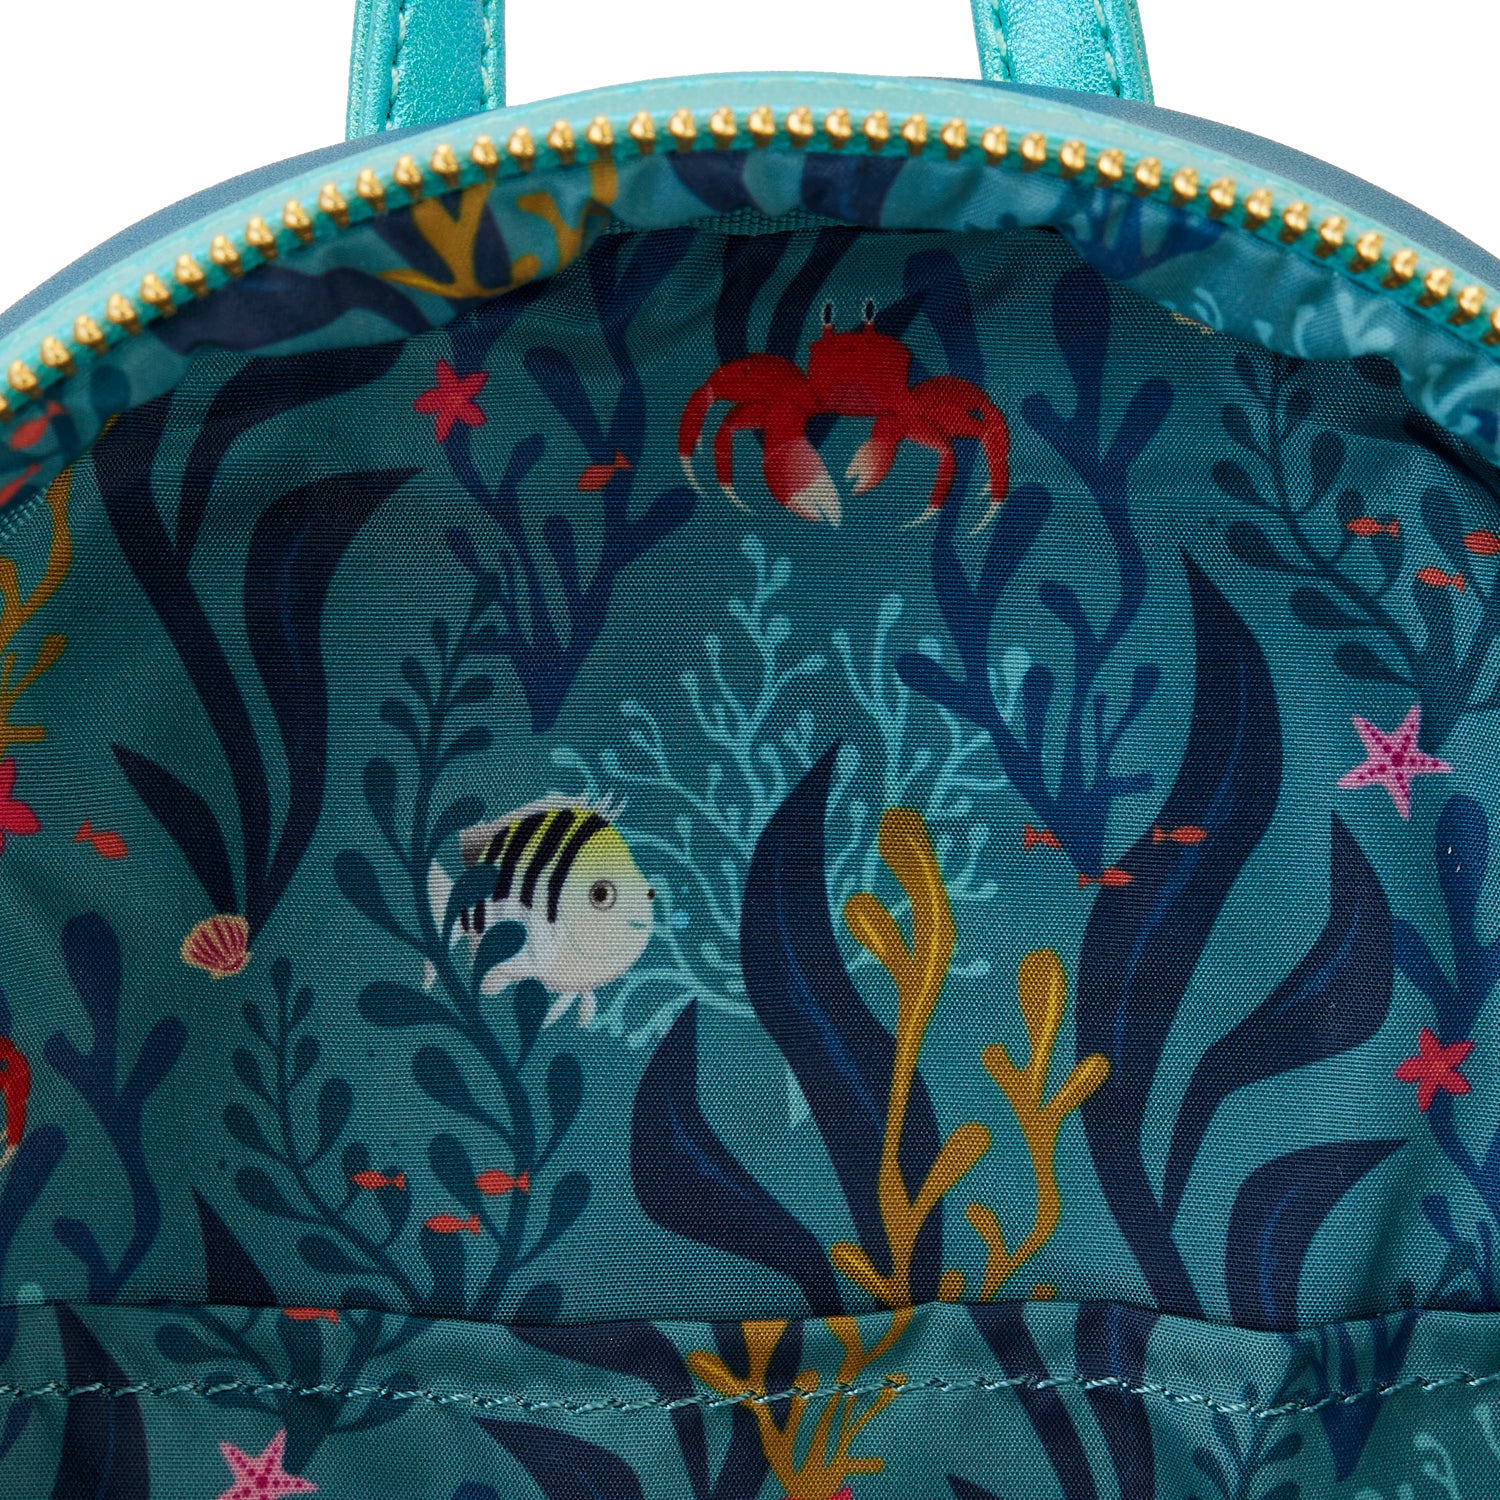 Disney | Little Mermaid Live Action Movie Mini Backpack